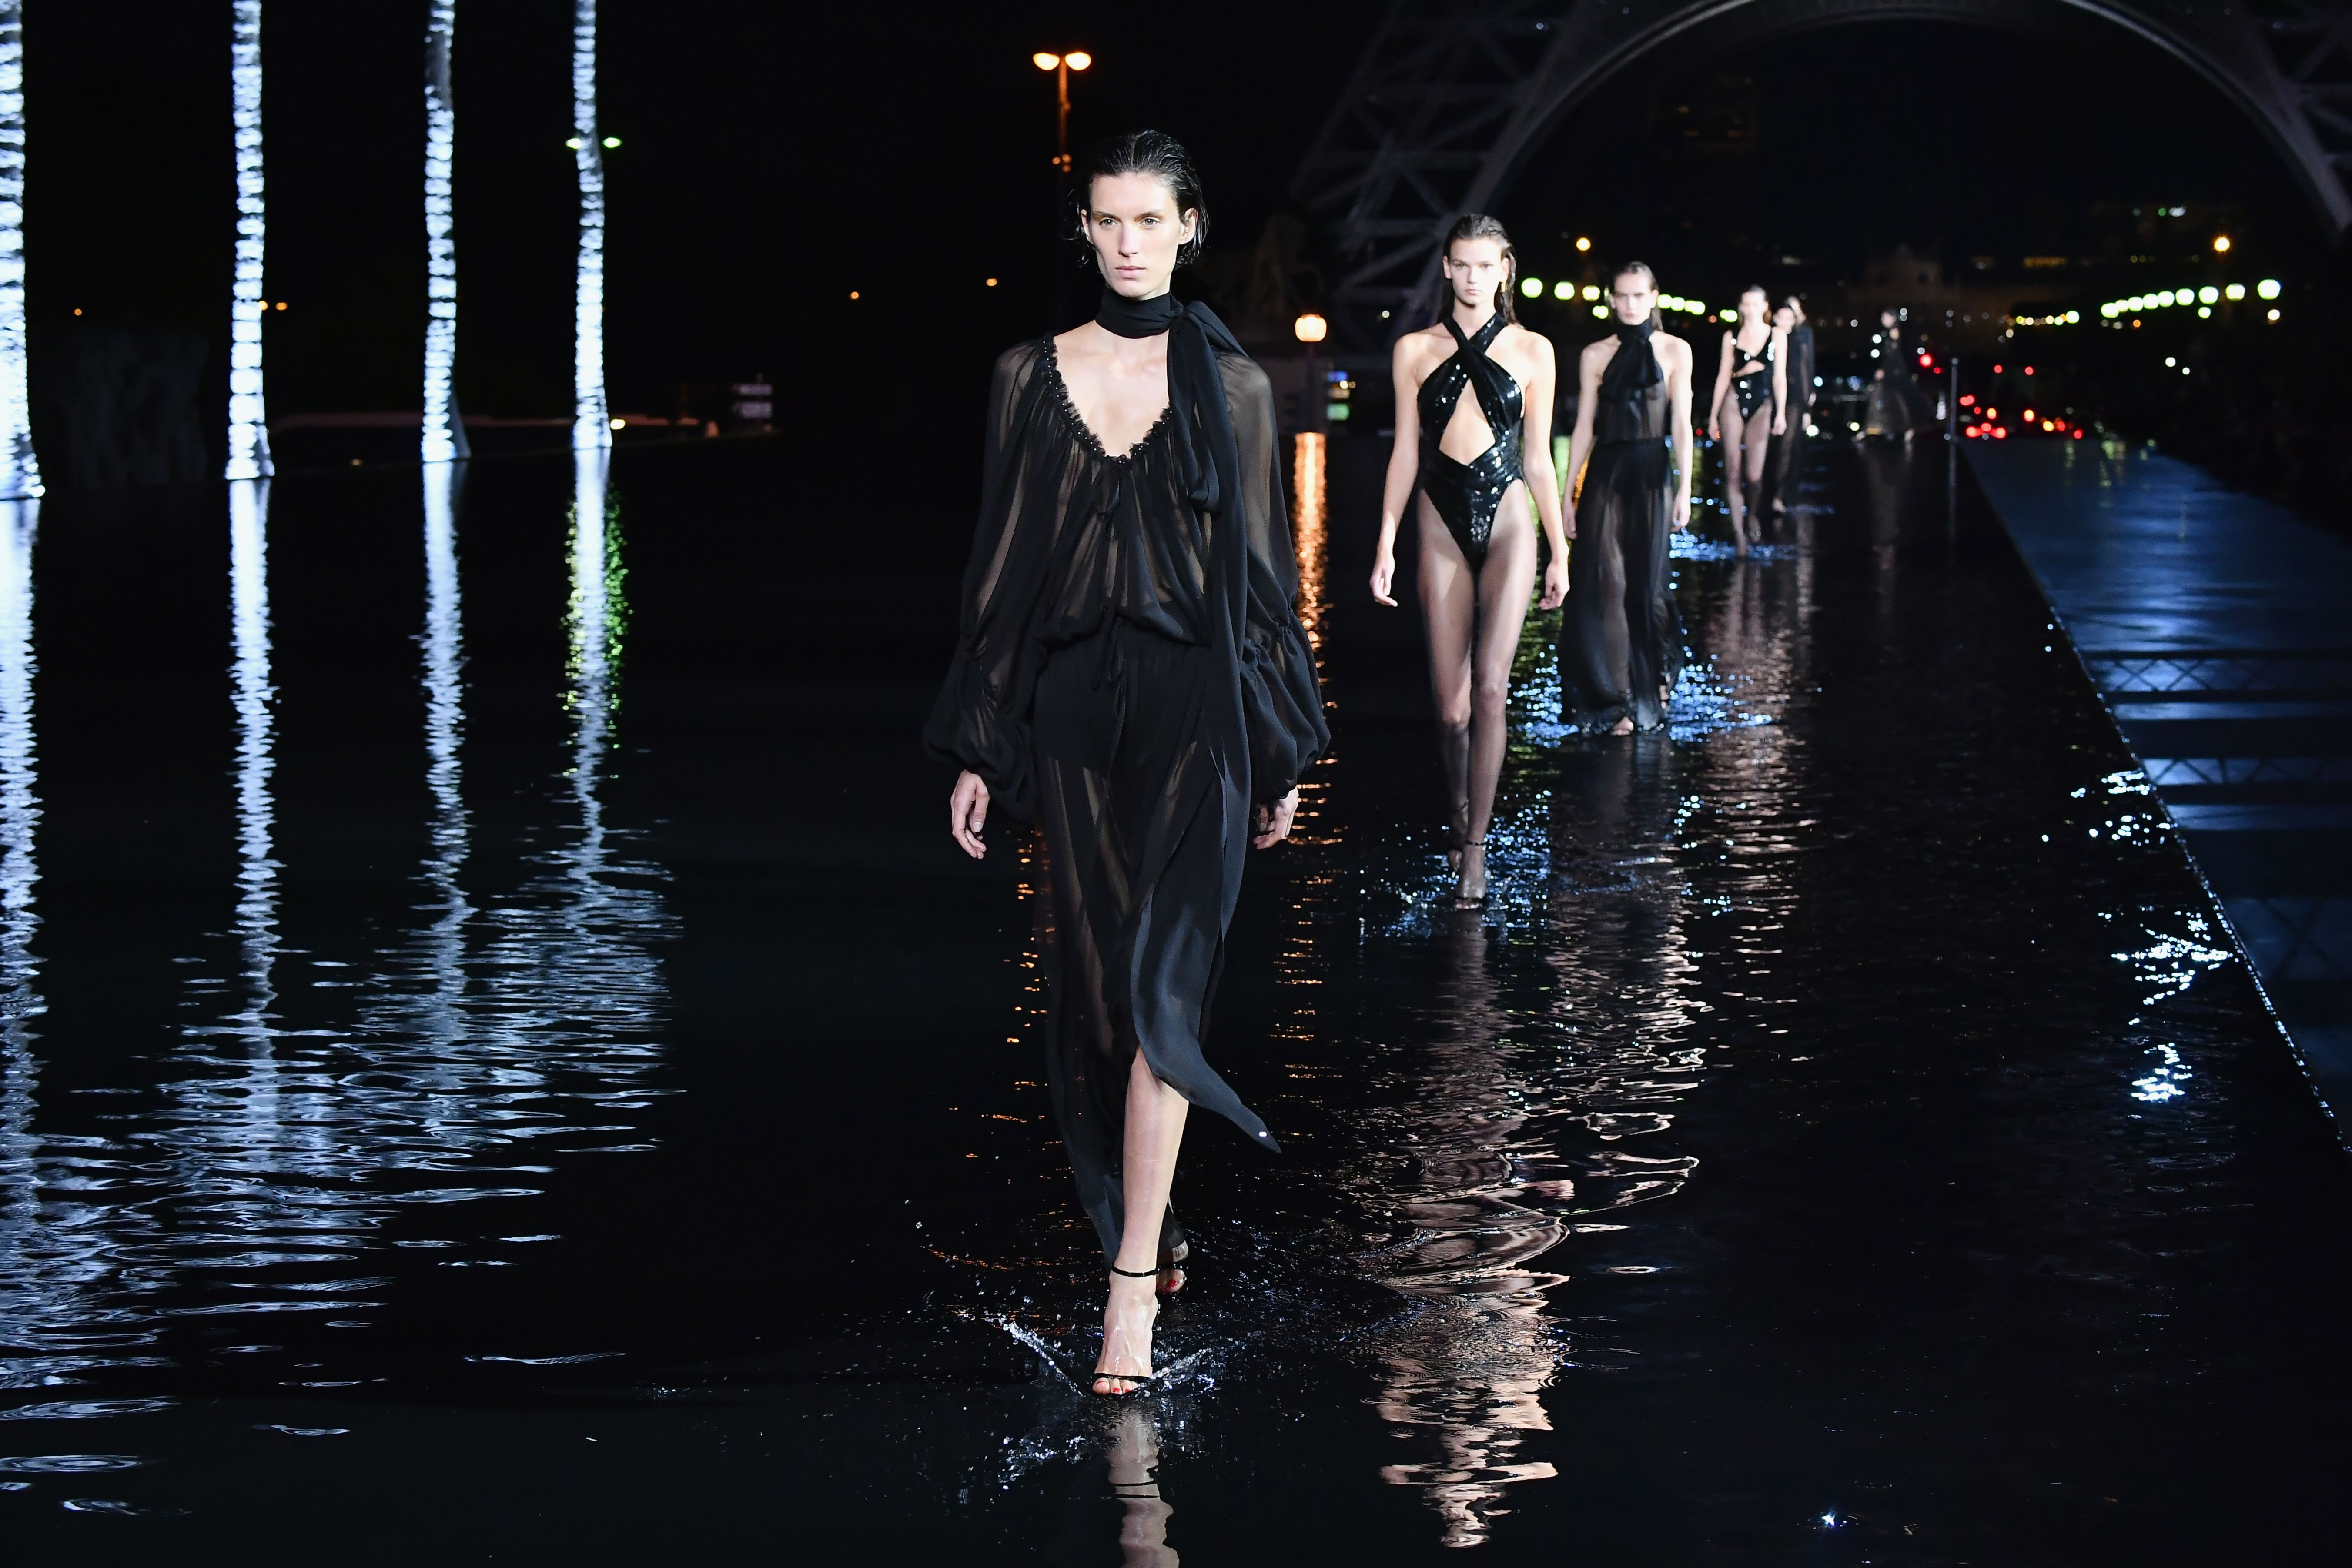 Saint Laurent showcases glow-in-the-dark dresses at Paris Fashion Week, London Evening Standard